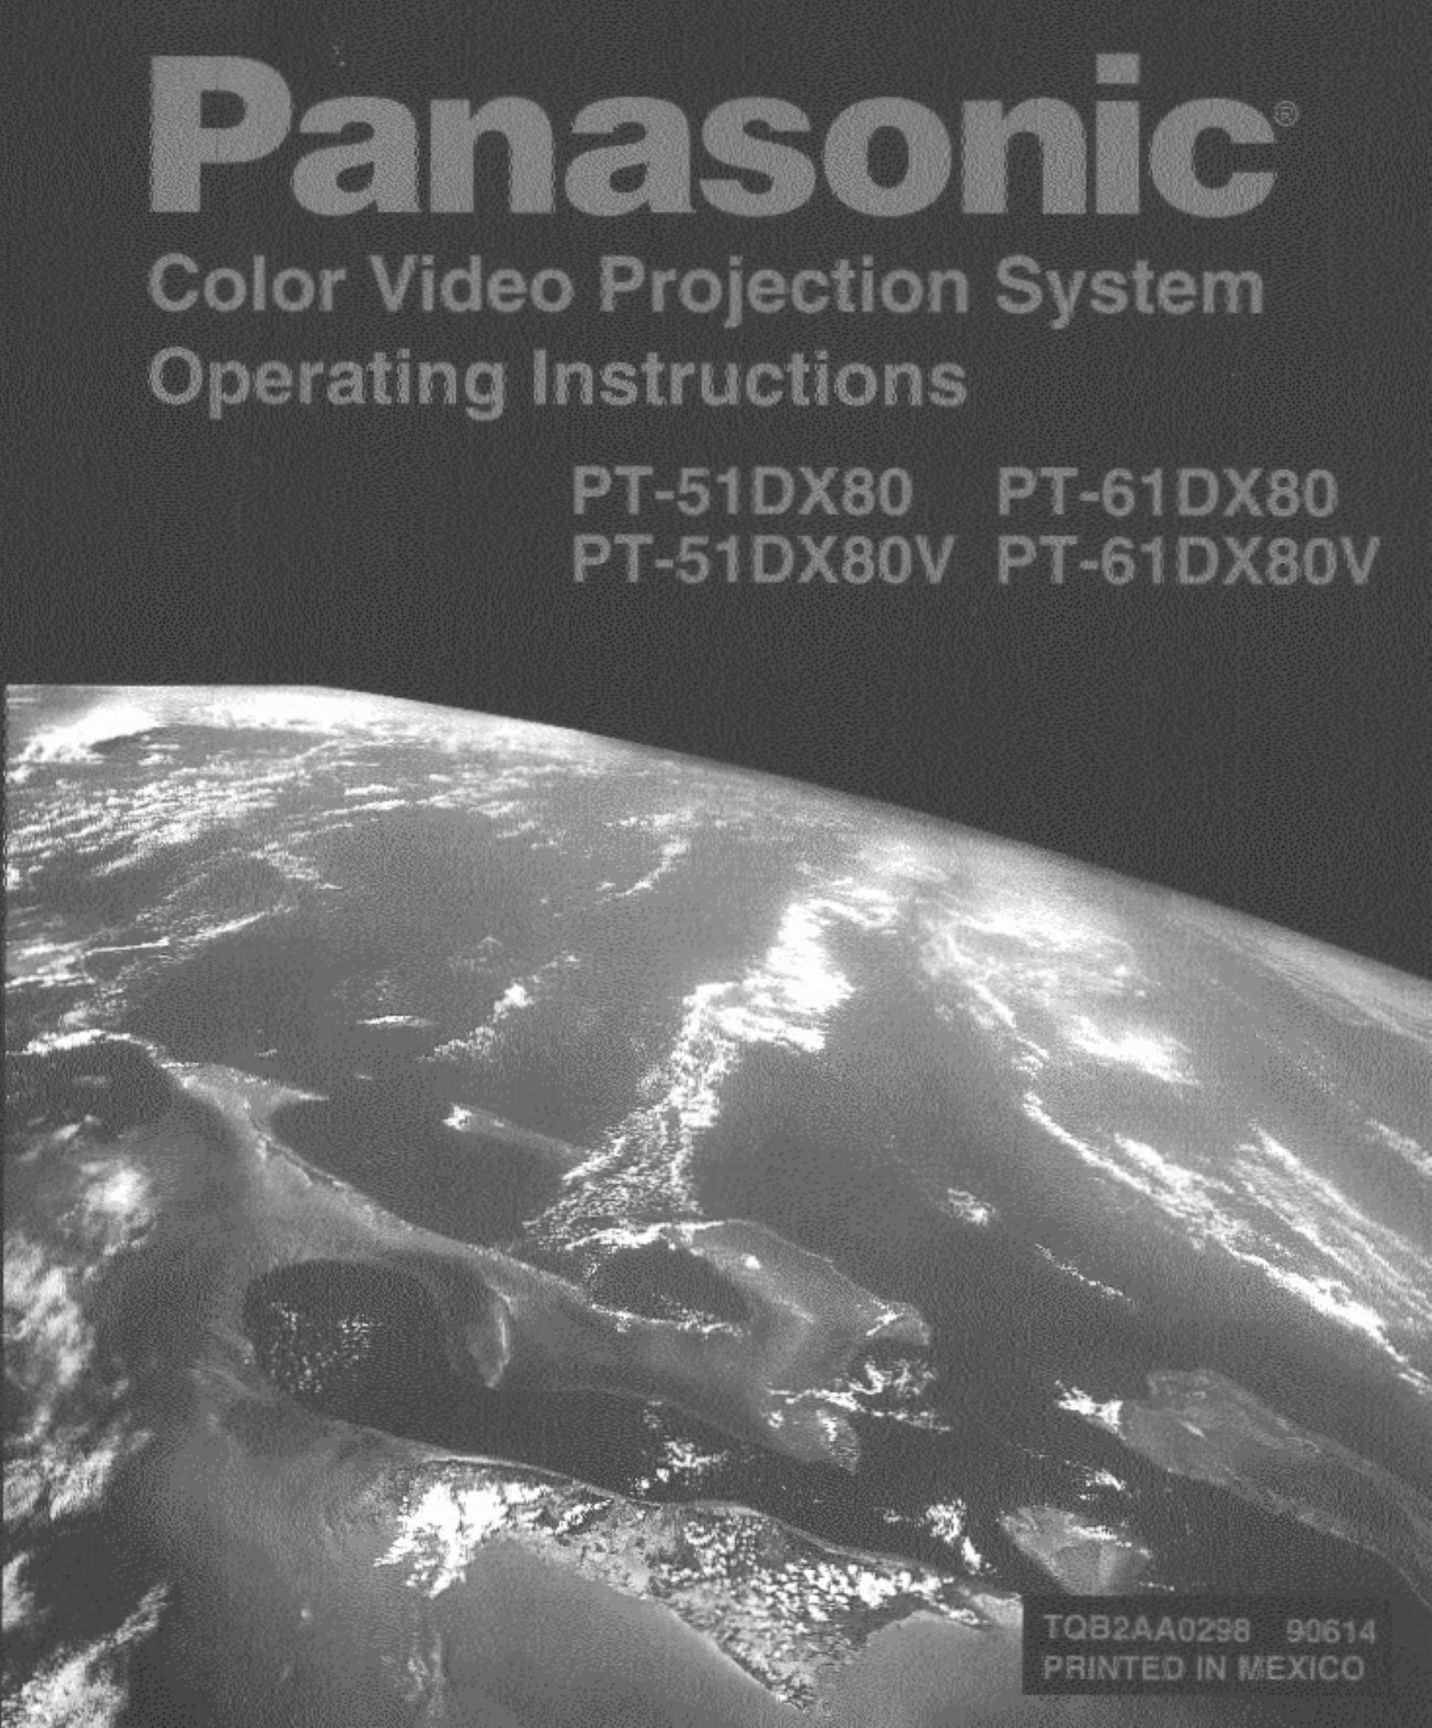 Panasonic PT-51DX80V Projector User Manual